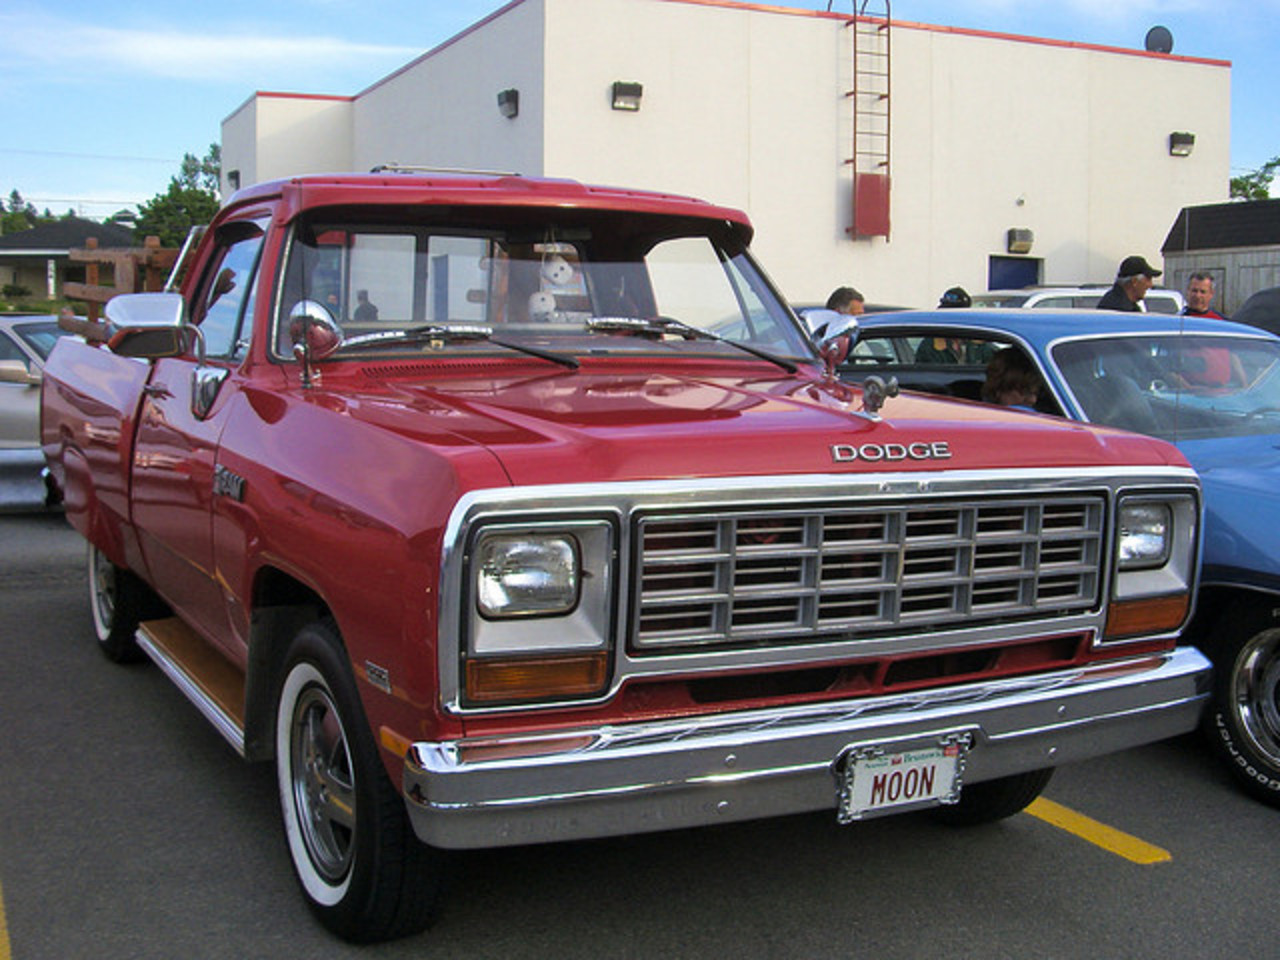 1984 Dodge Ram 100 | Flickr - Photo Sharing!